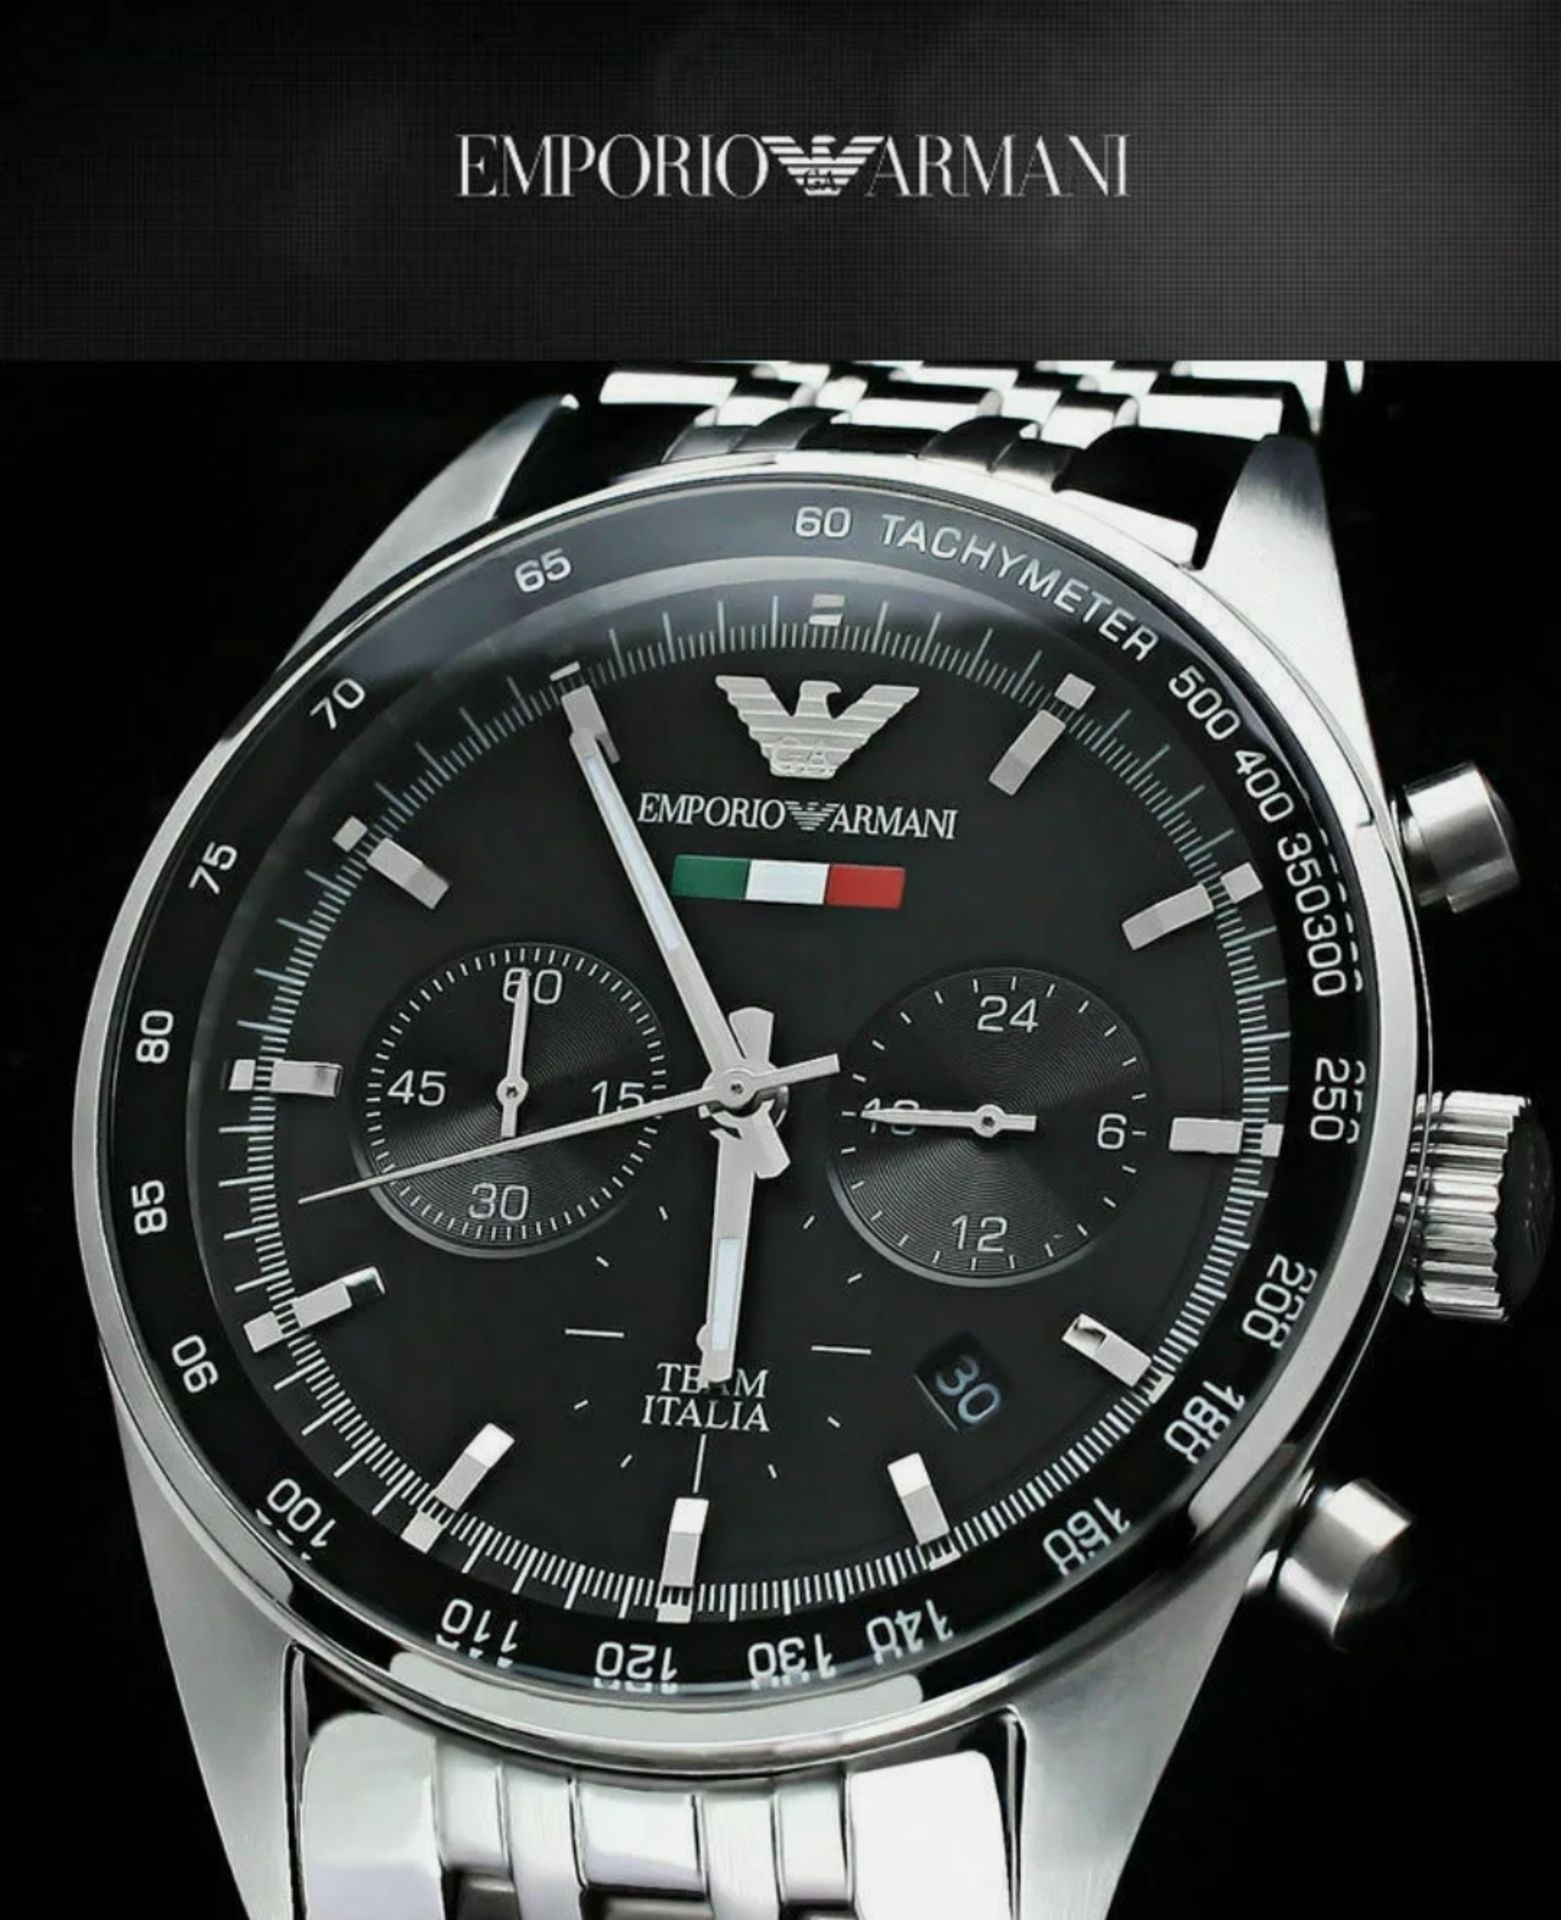 Men's Emporio Armani AR5983 Quartz Black Dial Stainless Steel Chronograph Watch - Image 4 of 6